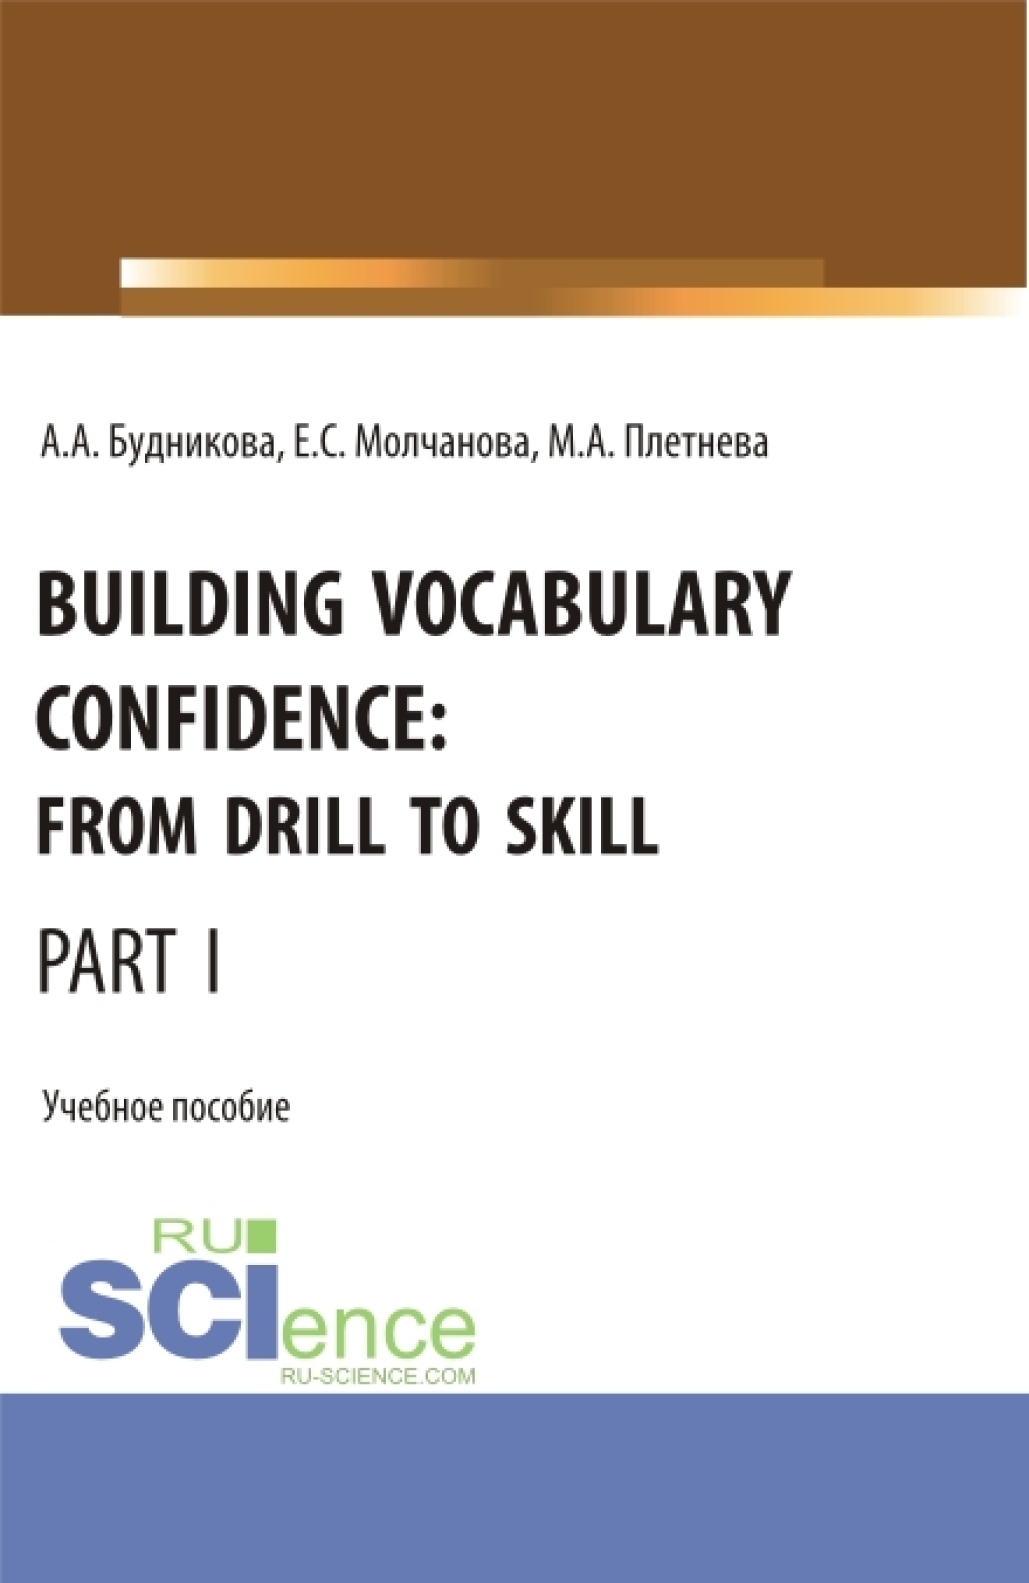 Building Vocabulary Confidence: from Drill to Skill (Part I). (Бакалавриат, Магистратура). Учебное пособие.